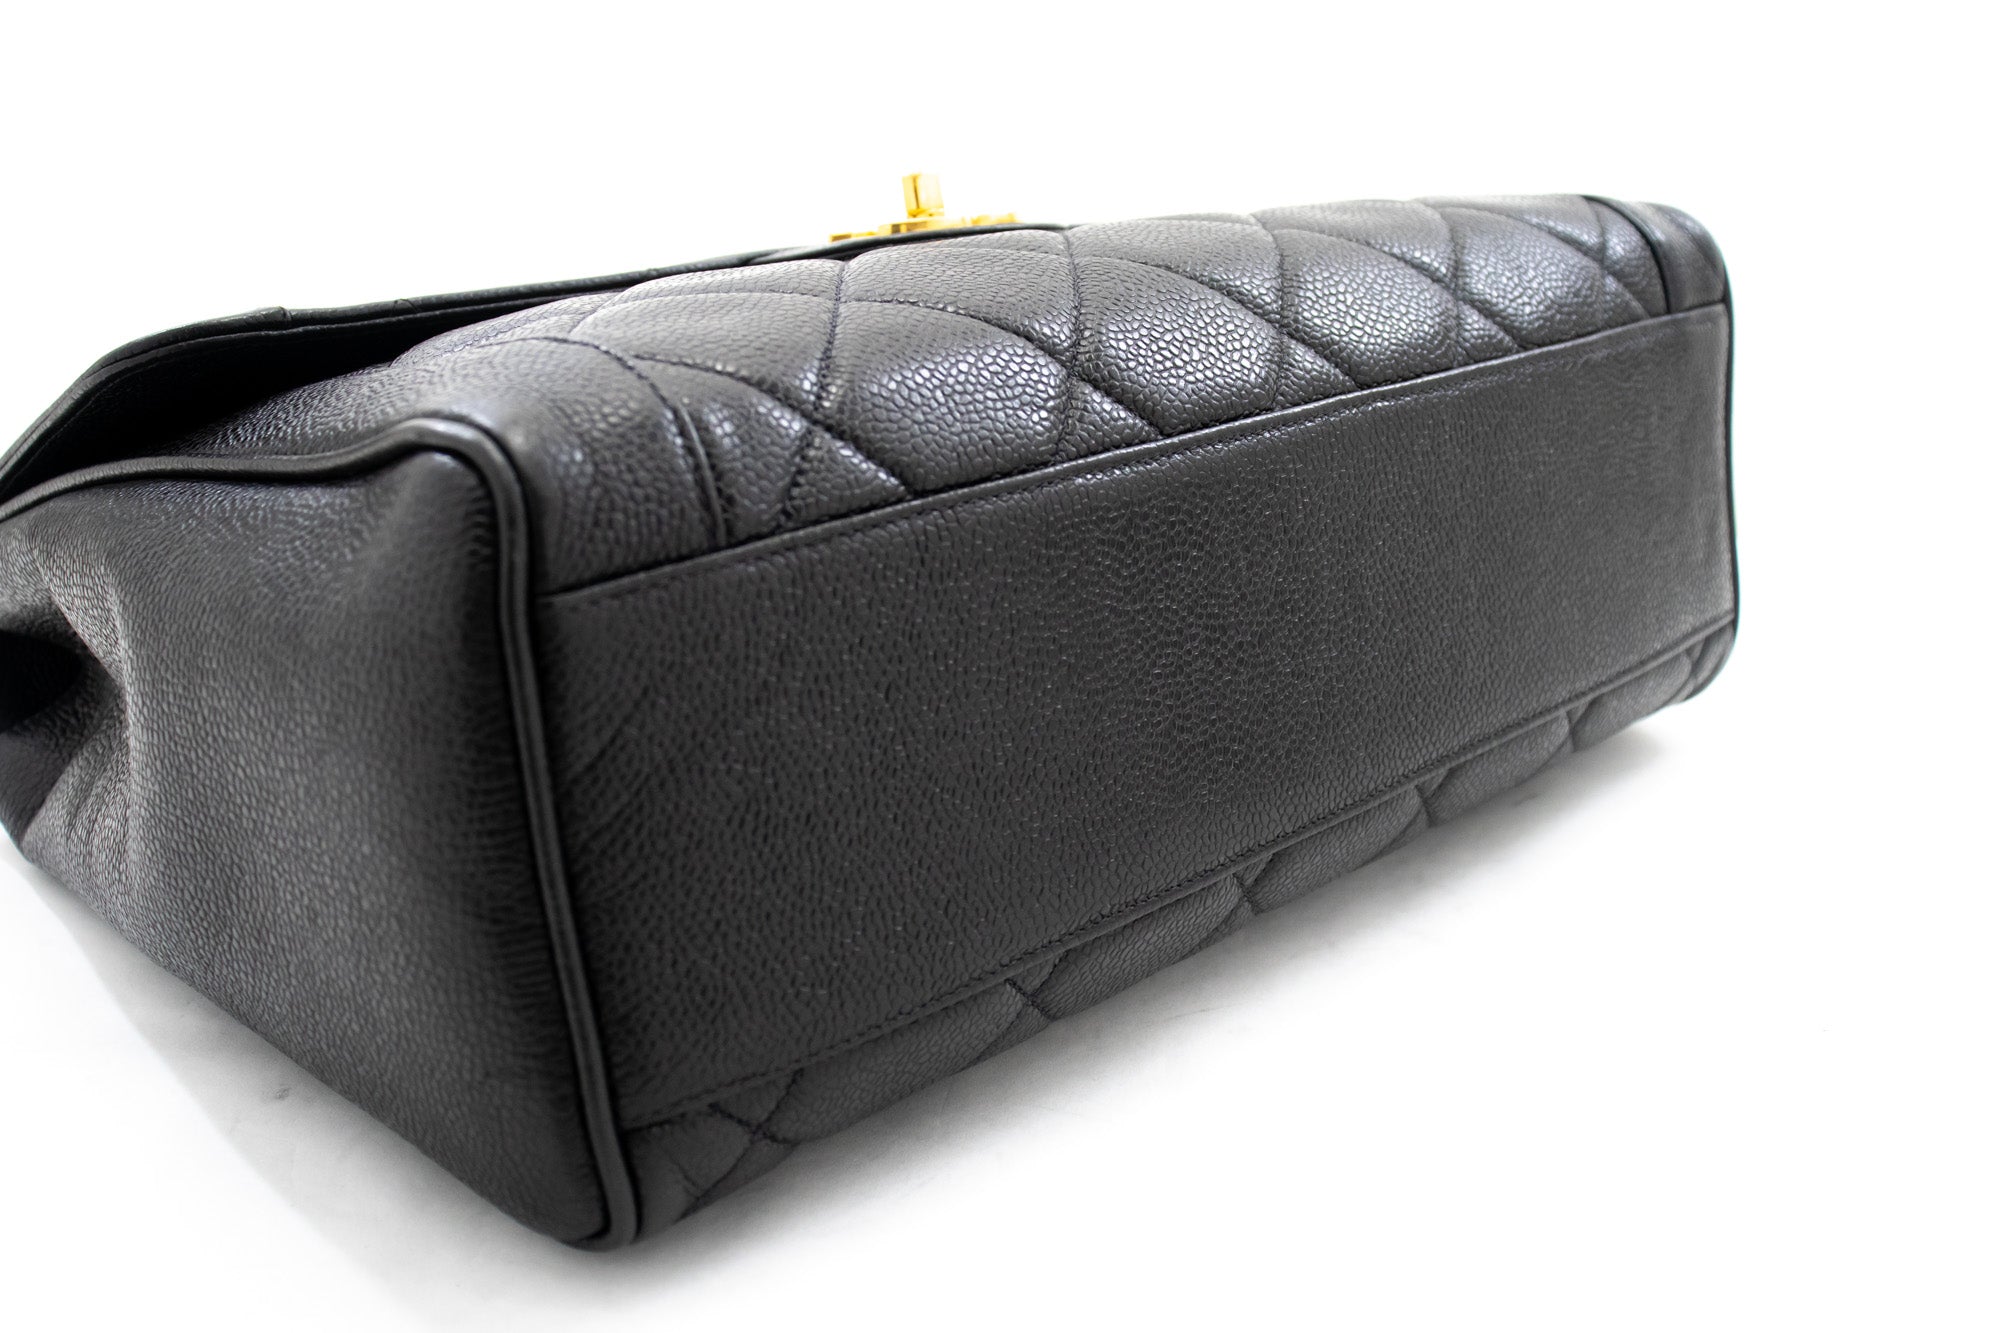 Classic Flap Jumbo Caviar 14-16M – Keeks Designer Handbags